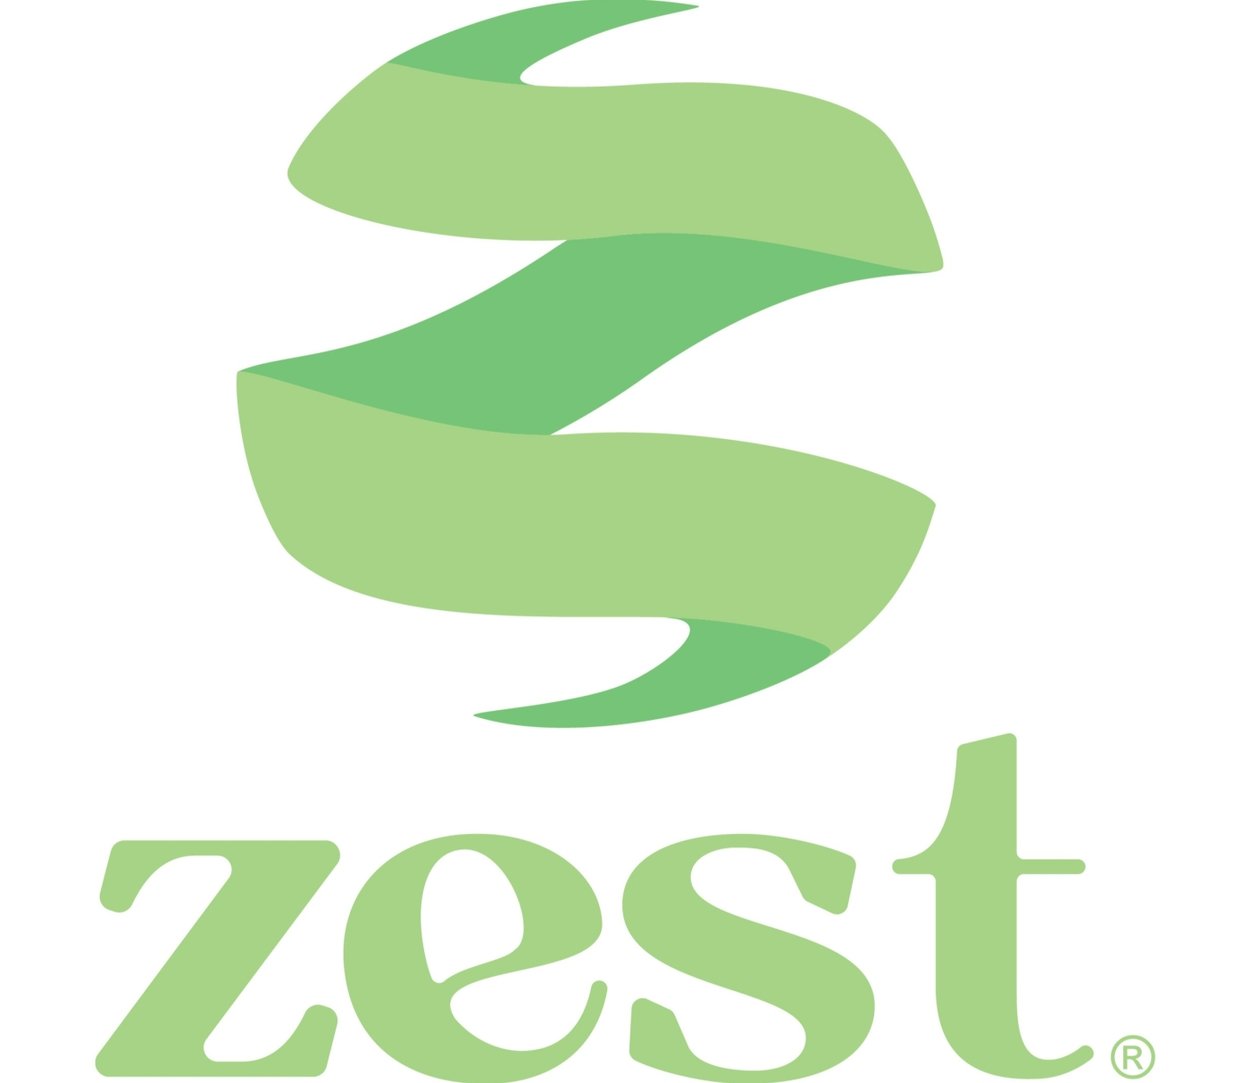 Zest wooden planters brand logo.